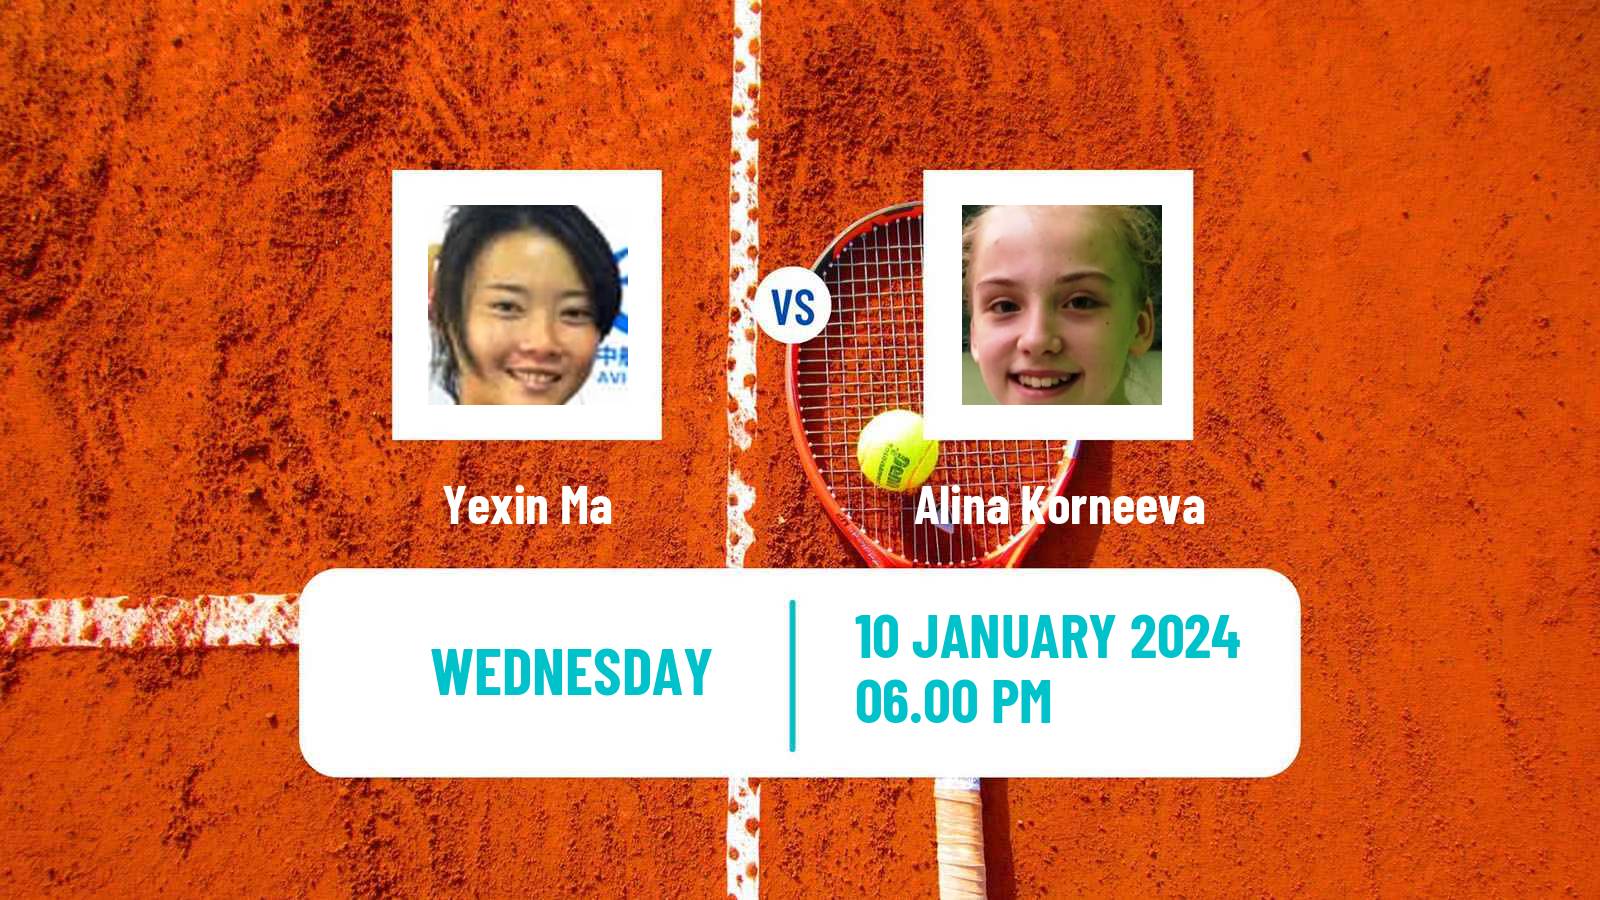 Tennis WTA Australian Open Yexin Ma - Alina Korneeva